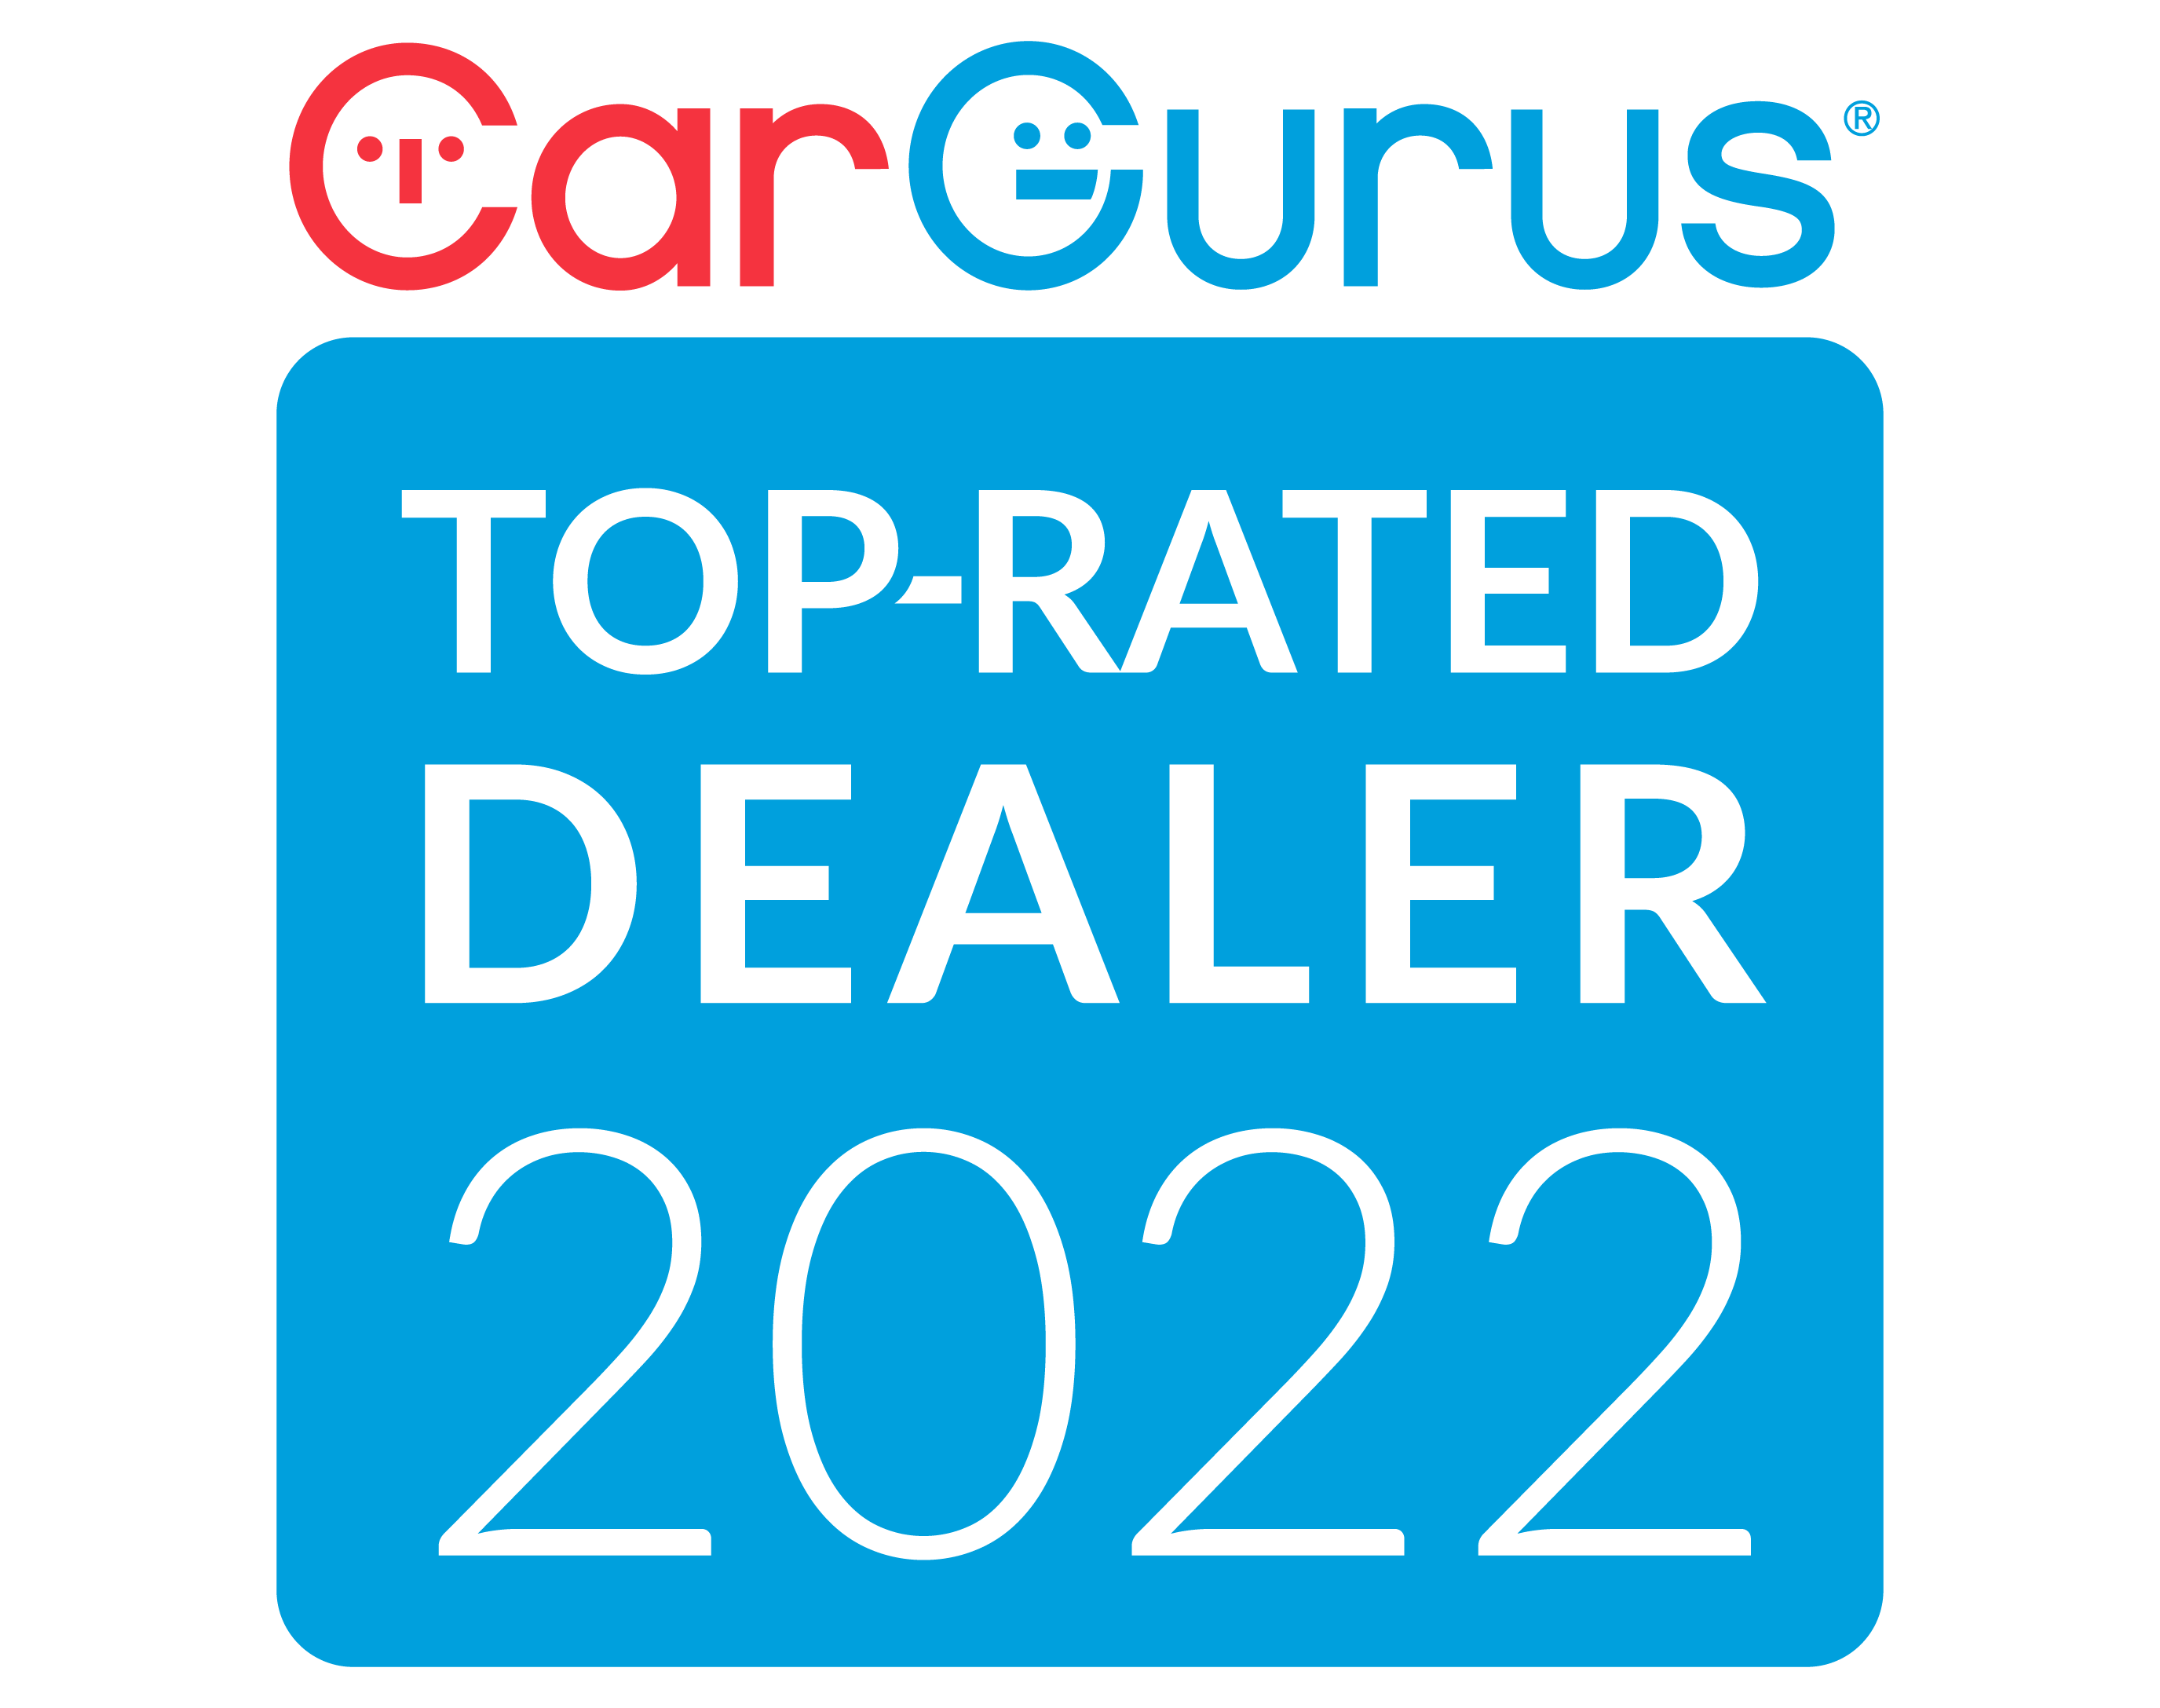  CarGurus Top Rated Dealer 2022